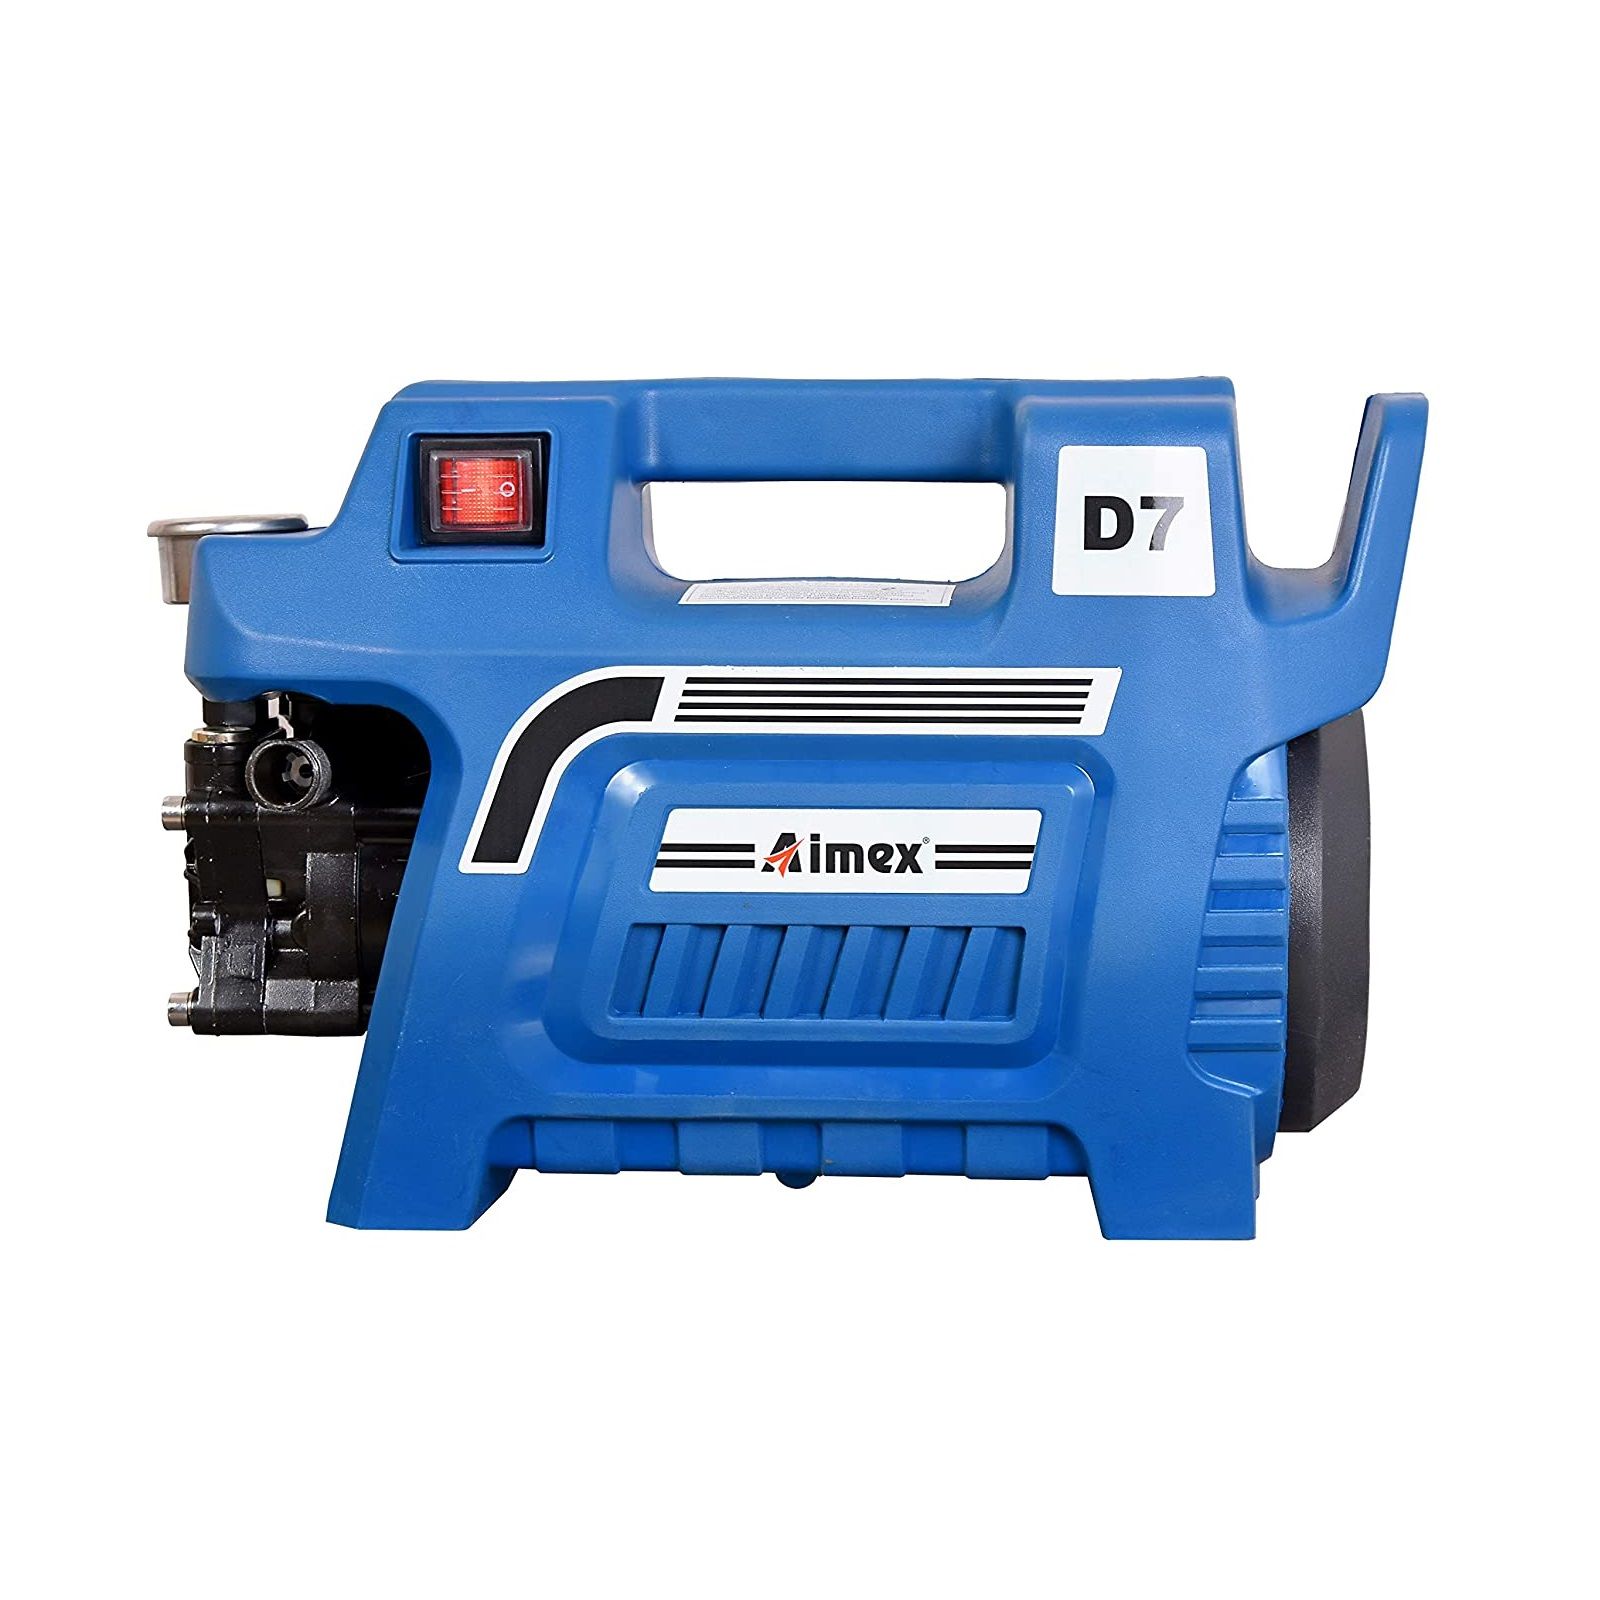 Aimex D7 Pressure Washer 1800W Portable Home Car Wash Machine With Jet Sprayer/ Foam Can